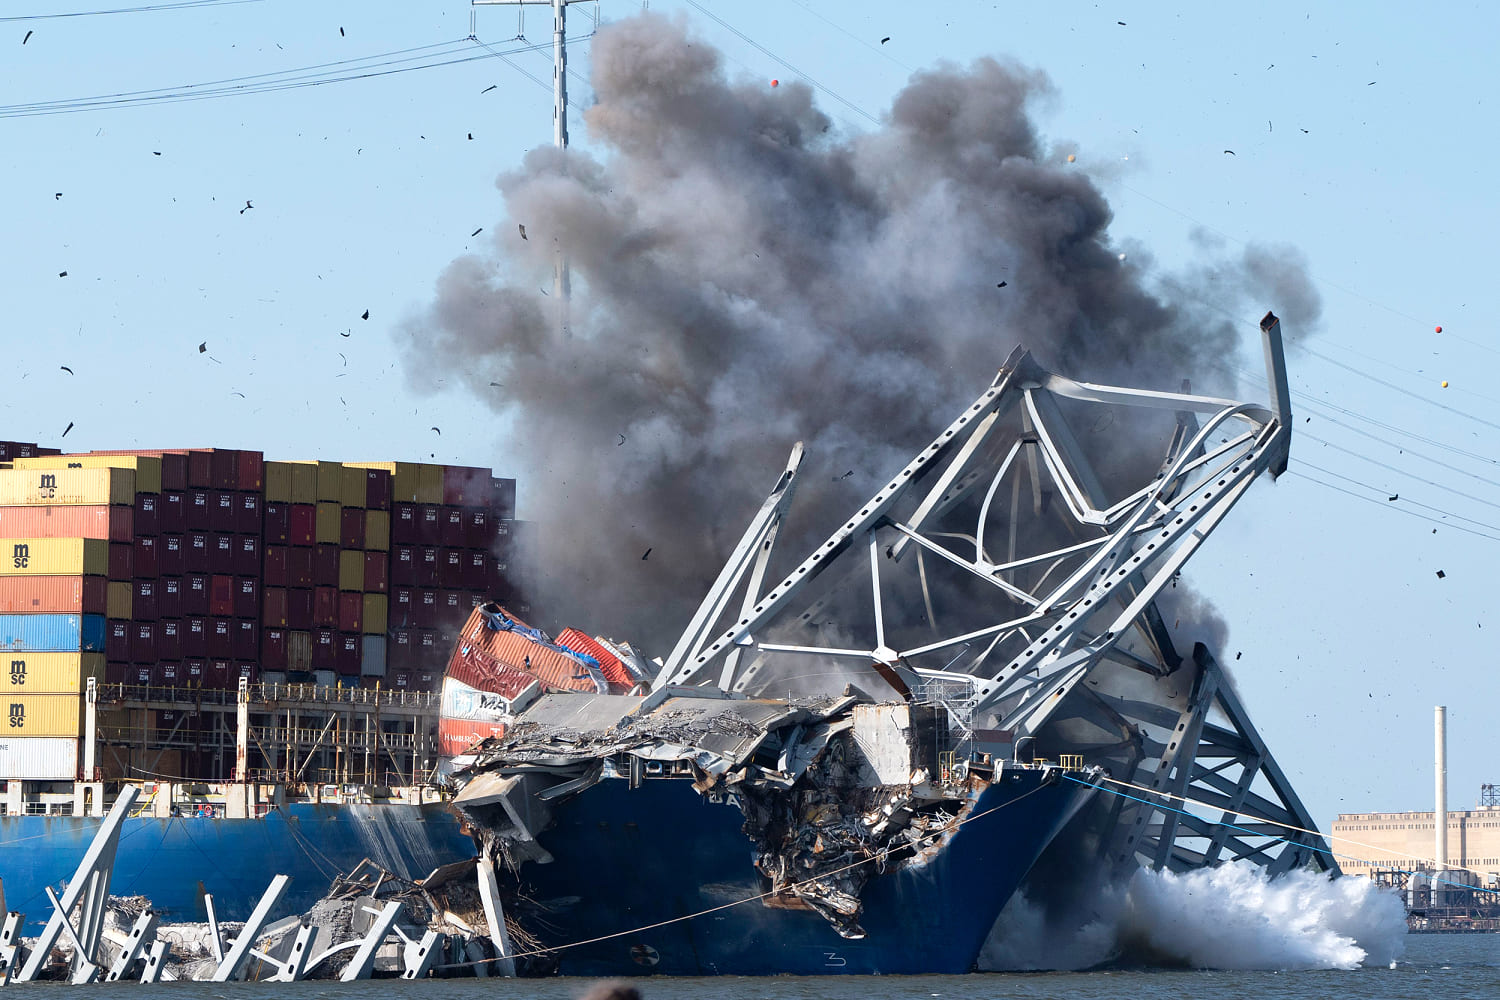 Baltimore bridge span removed; ship freed with precision blast